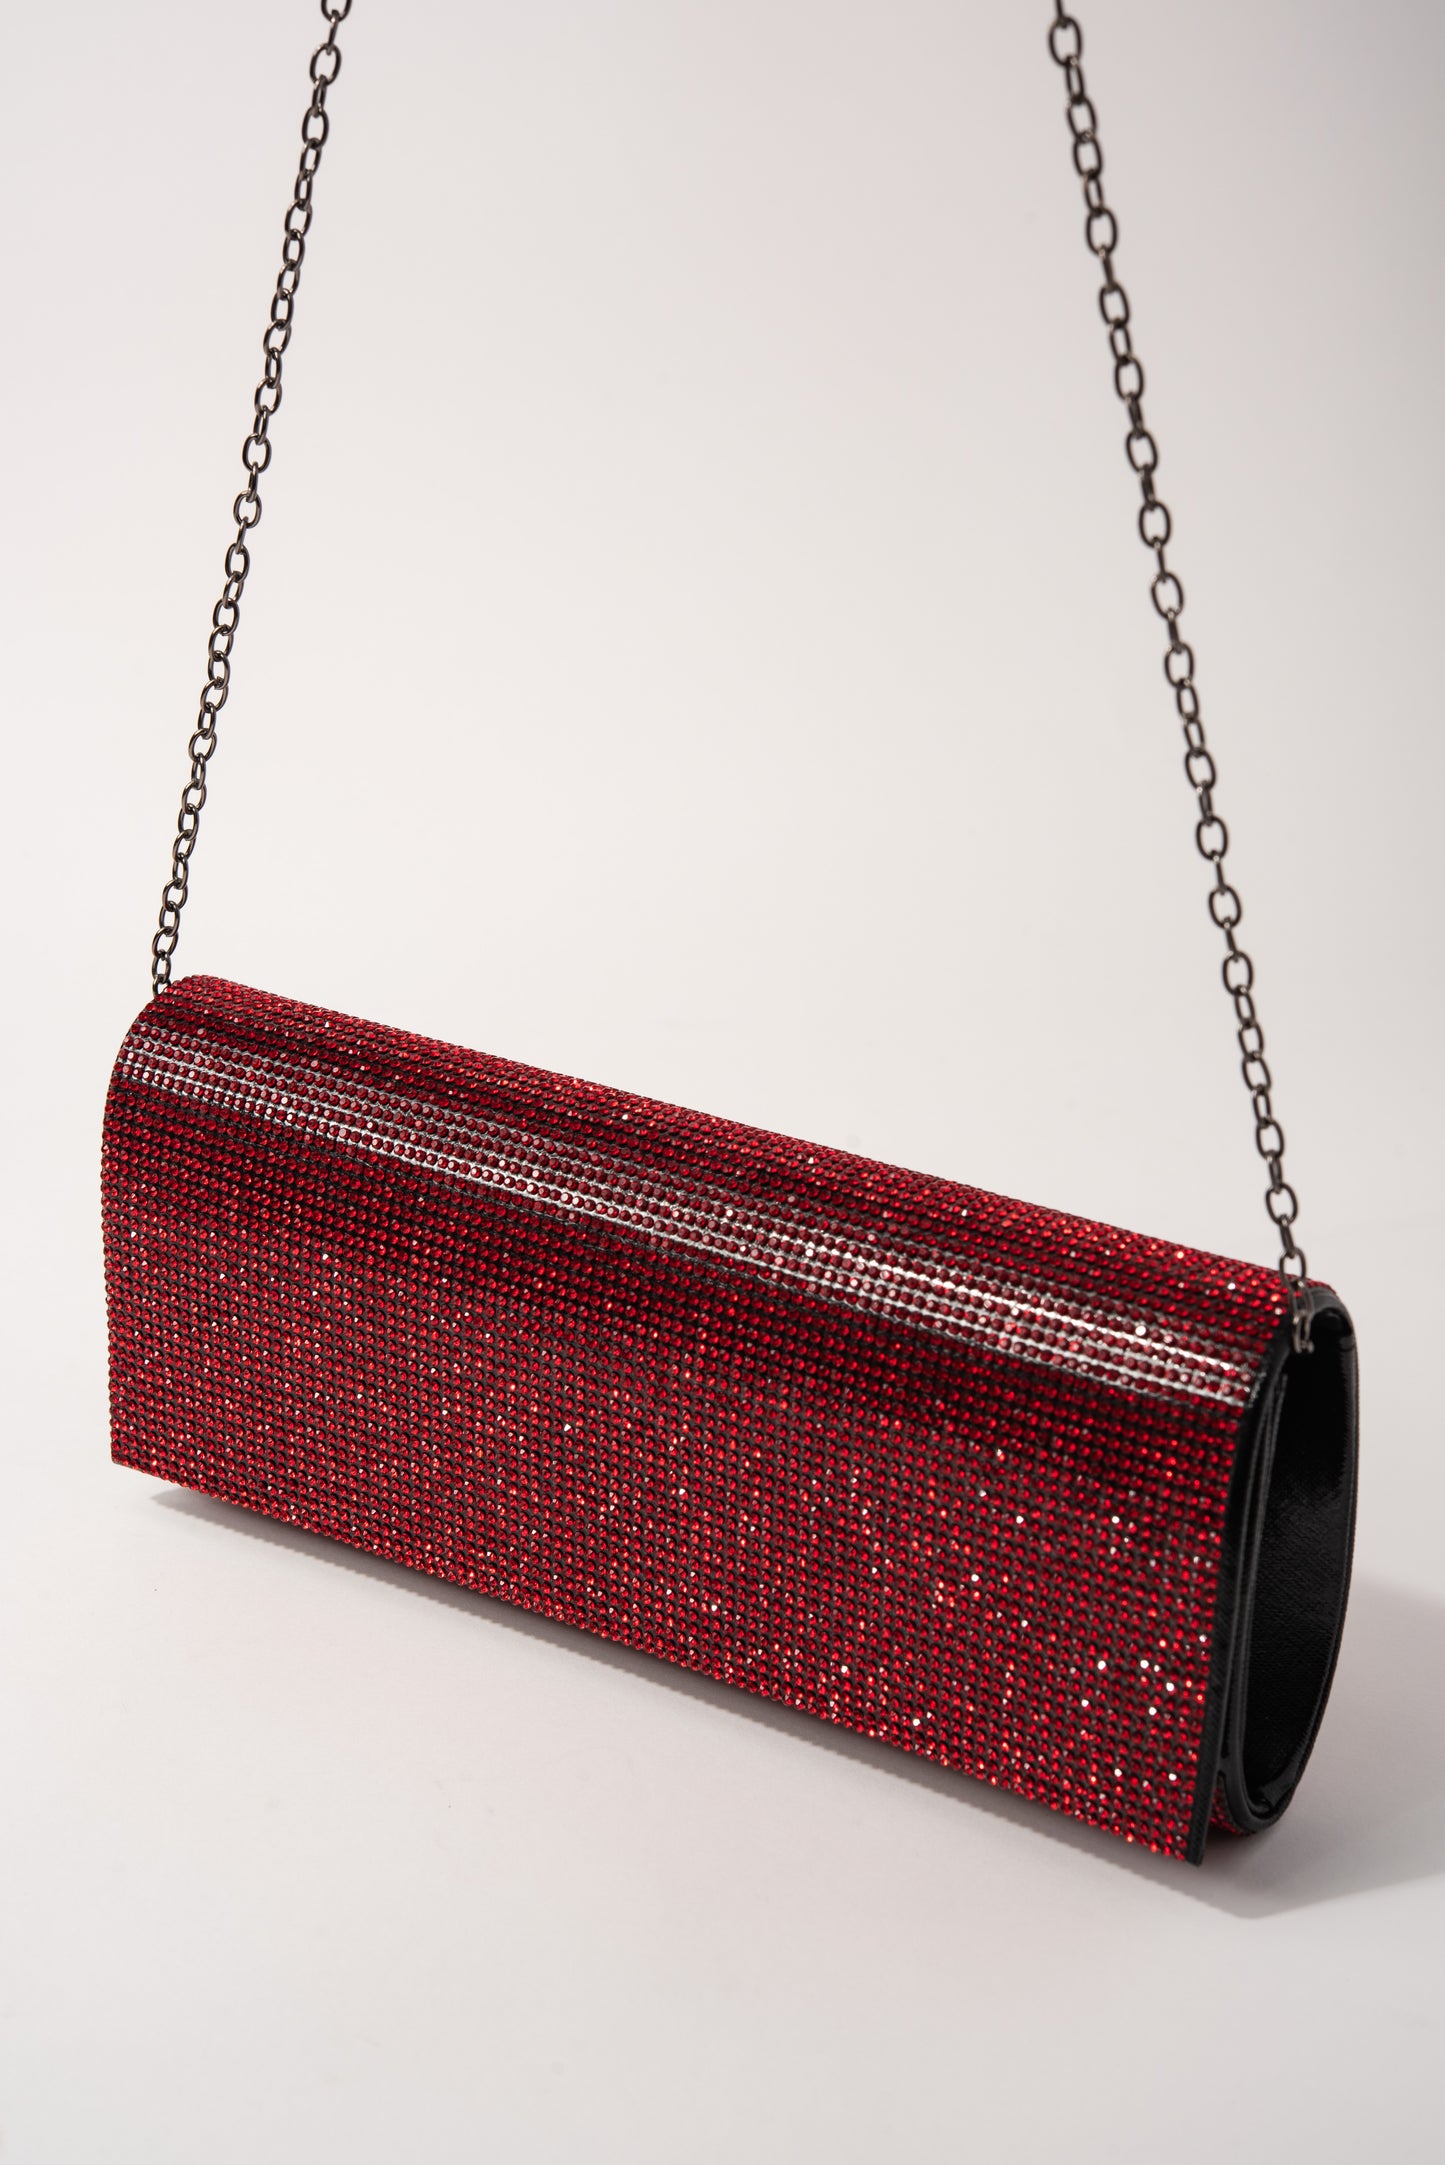 Rhinestone Embellished Clutch Evening Bag Purse - Black Red